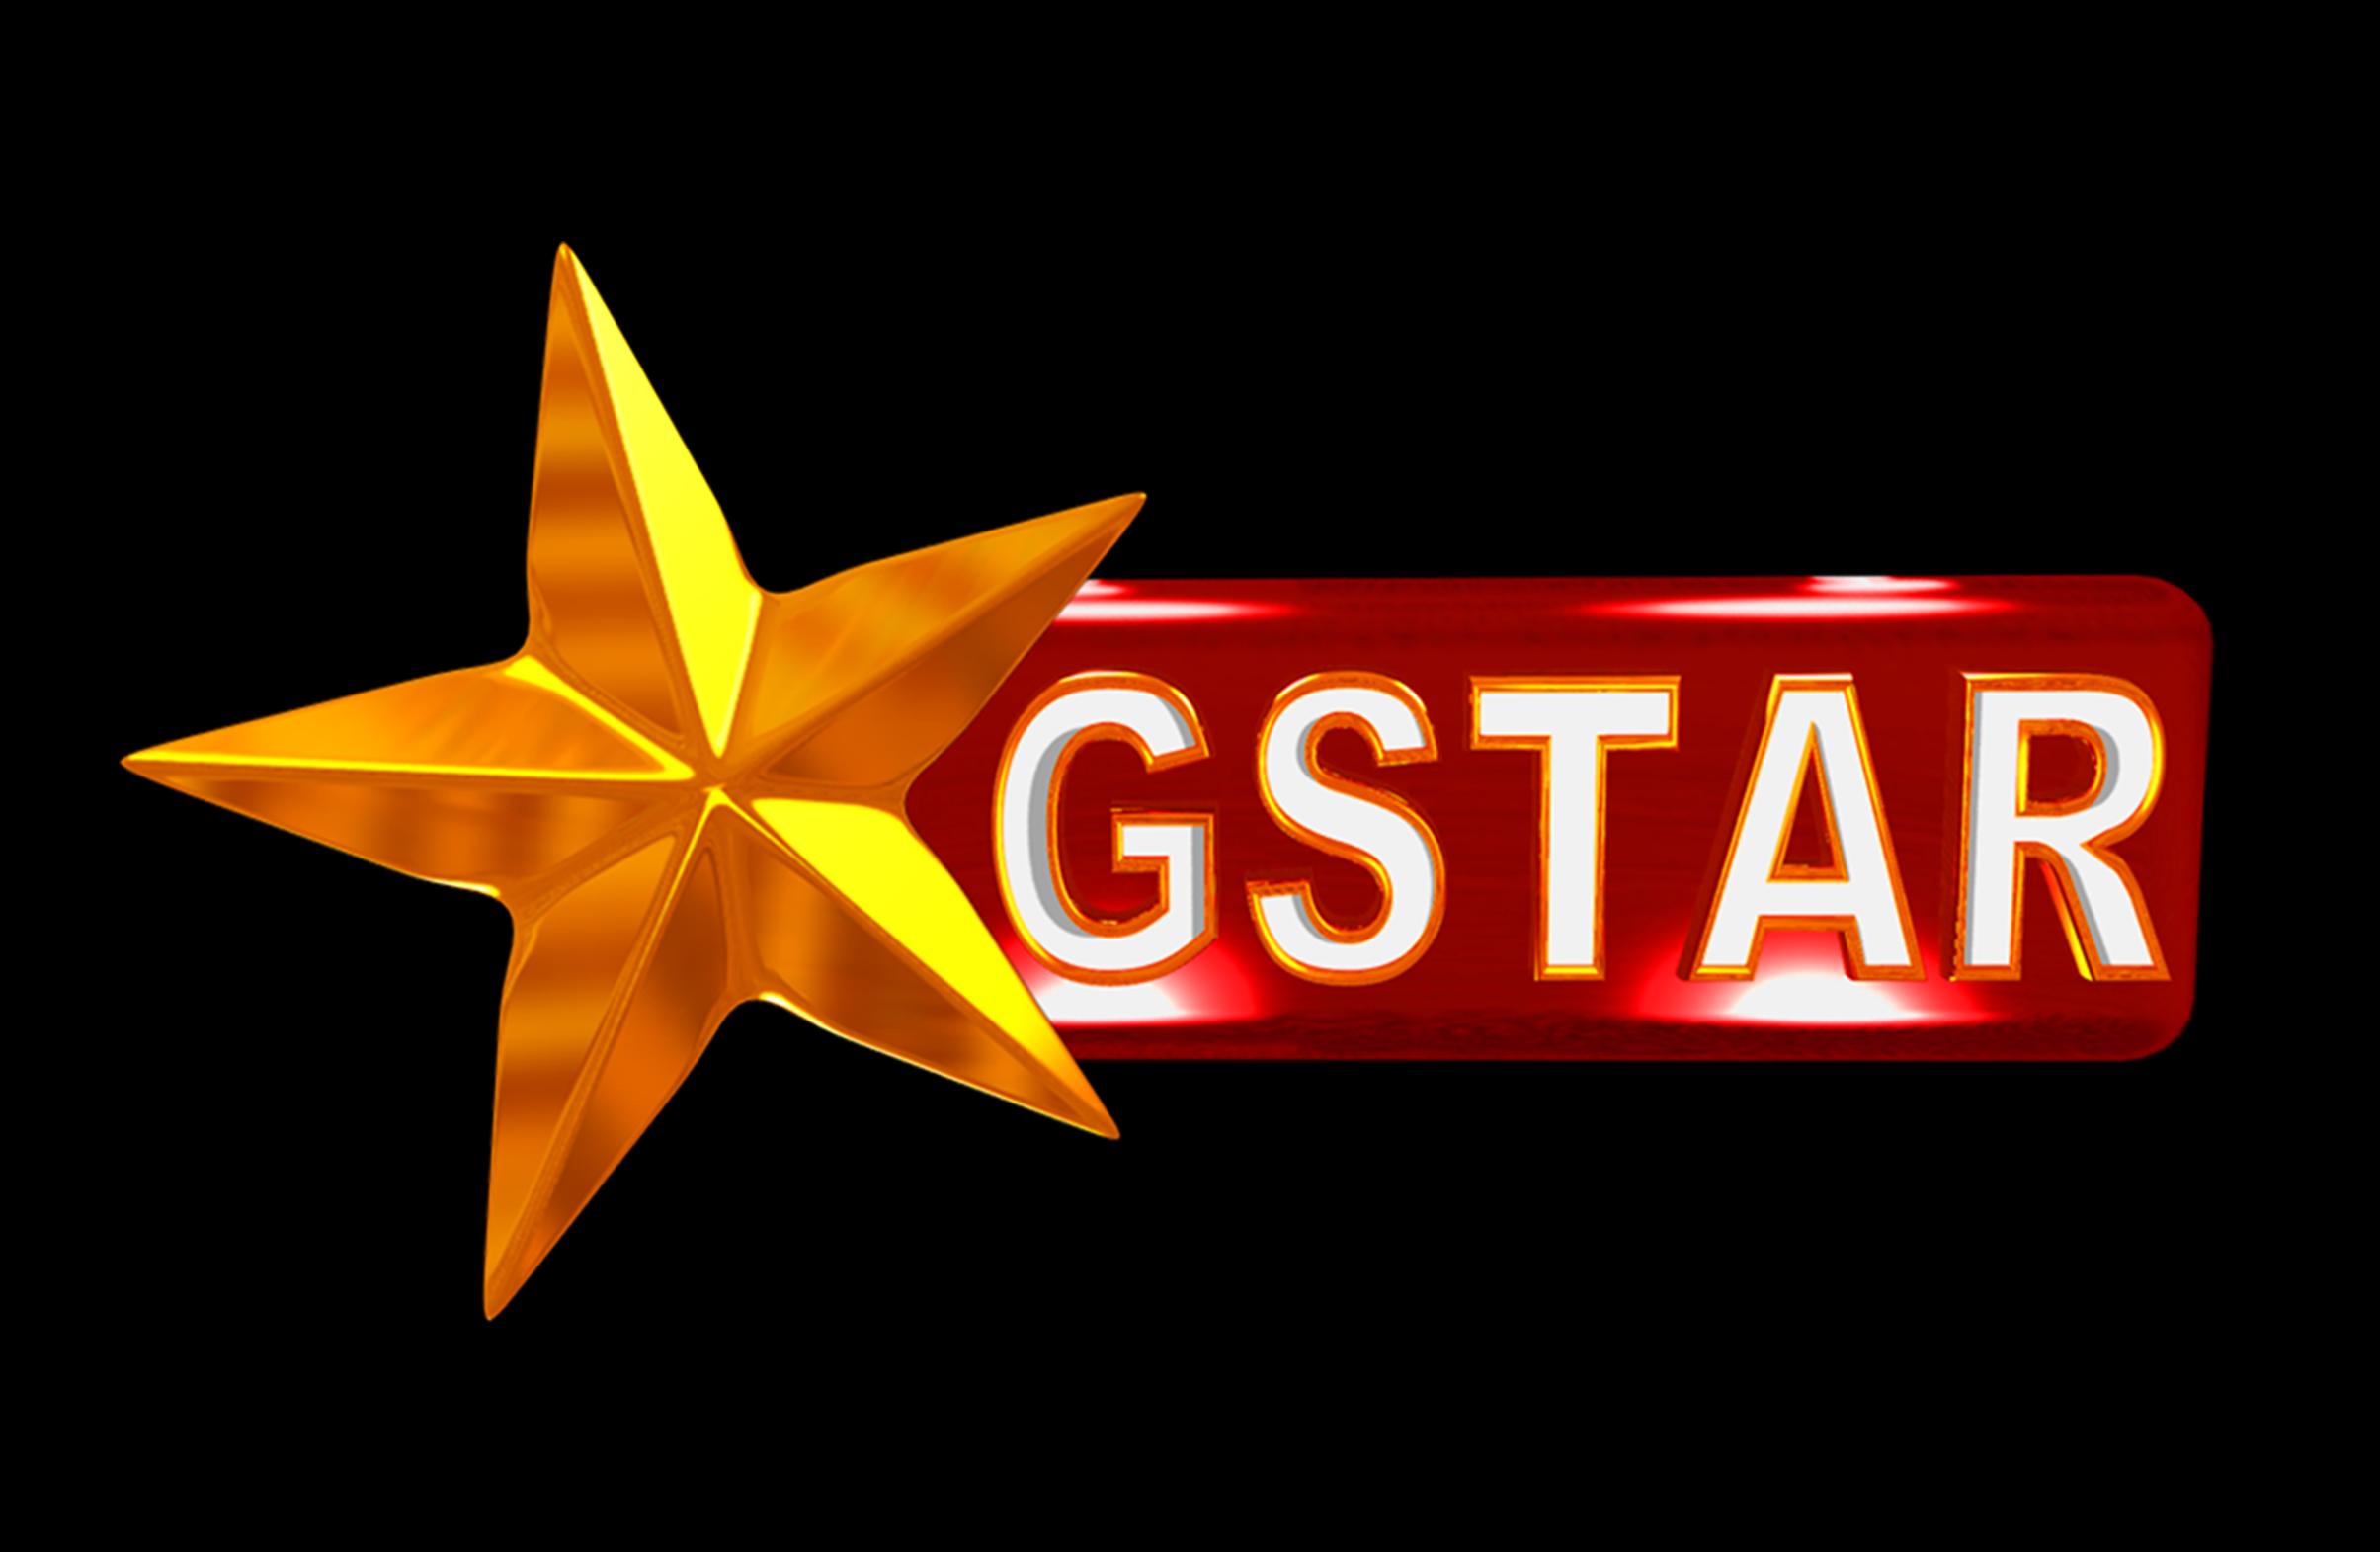 G-Star 4. ТВ звезда. Задело ТВ звезда. Star TV.